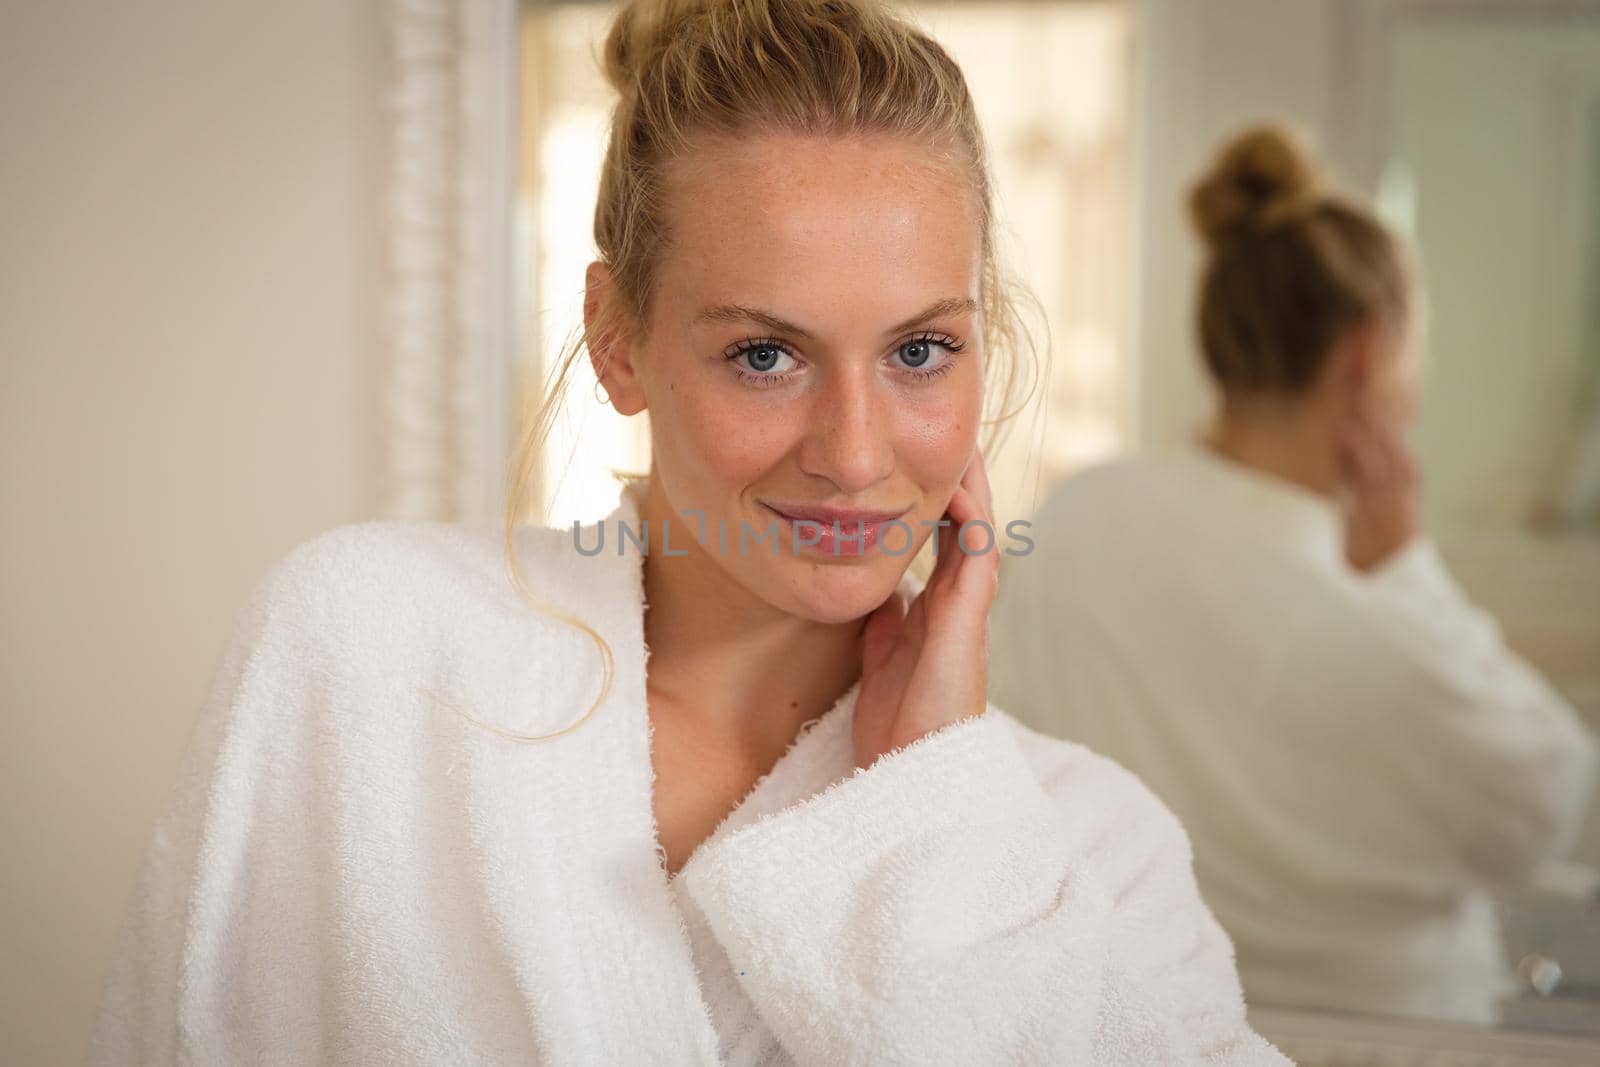 Portrait of smiling caucasian woman standing in bathroom wearing bathrobe by Wavebreakmedia